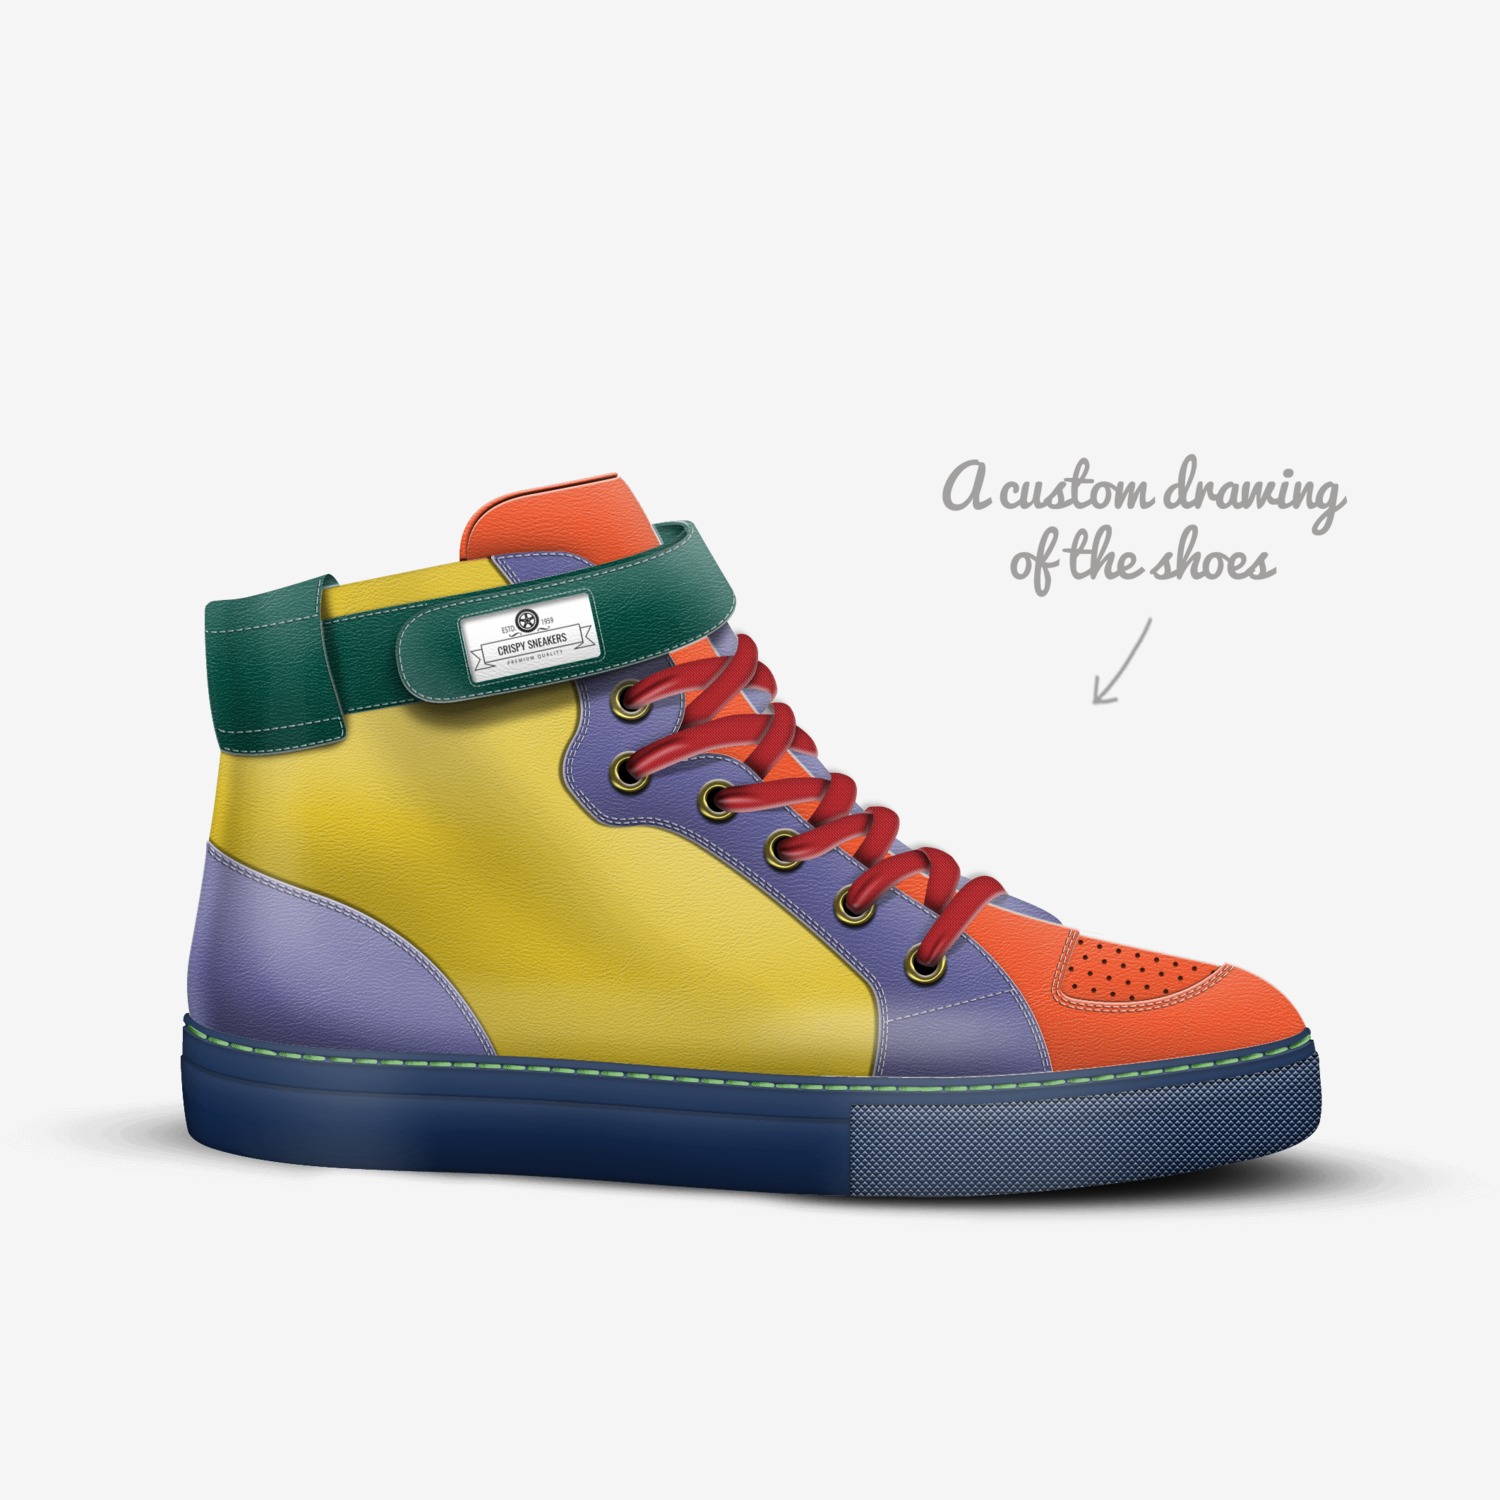 Crispy Sneakers | A Custom Shoe concept by Jacob Hazelwood